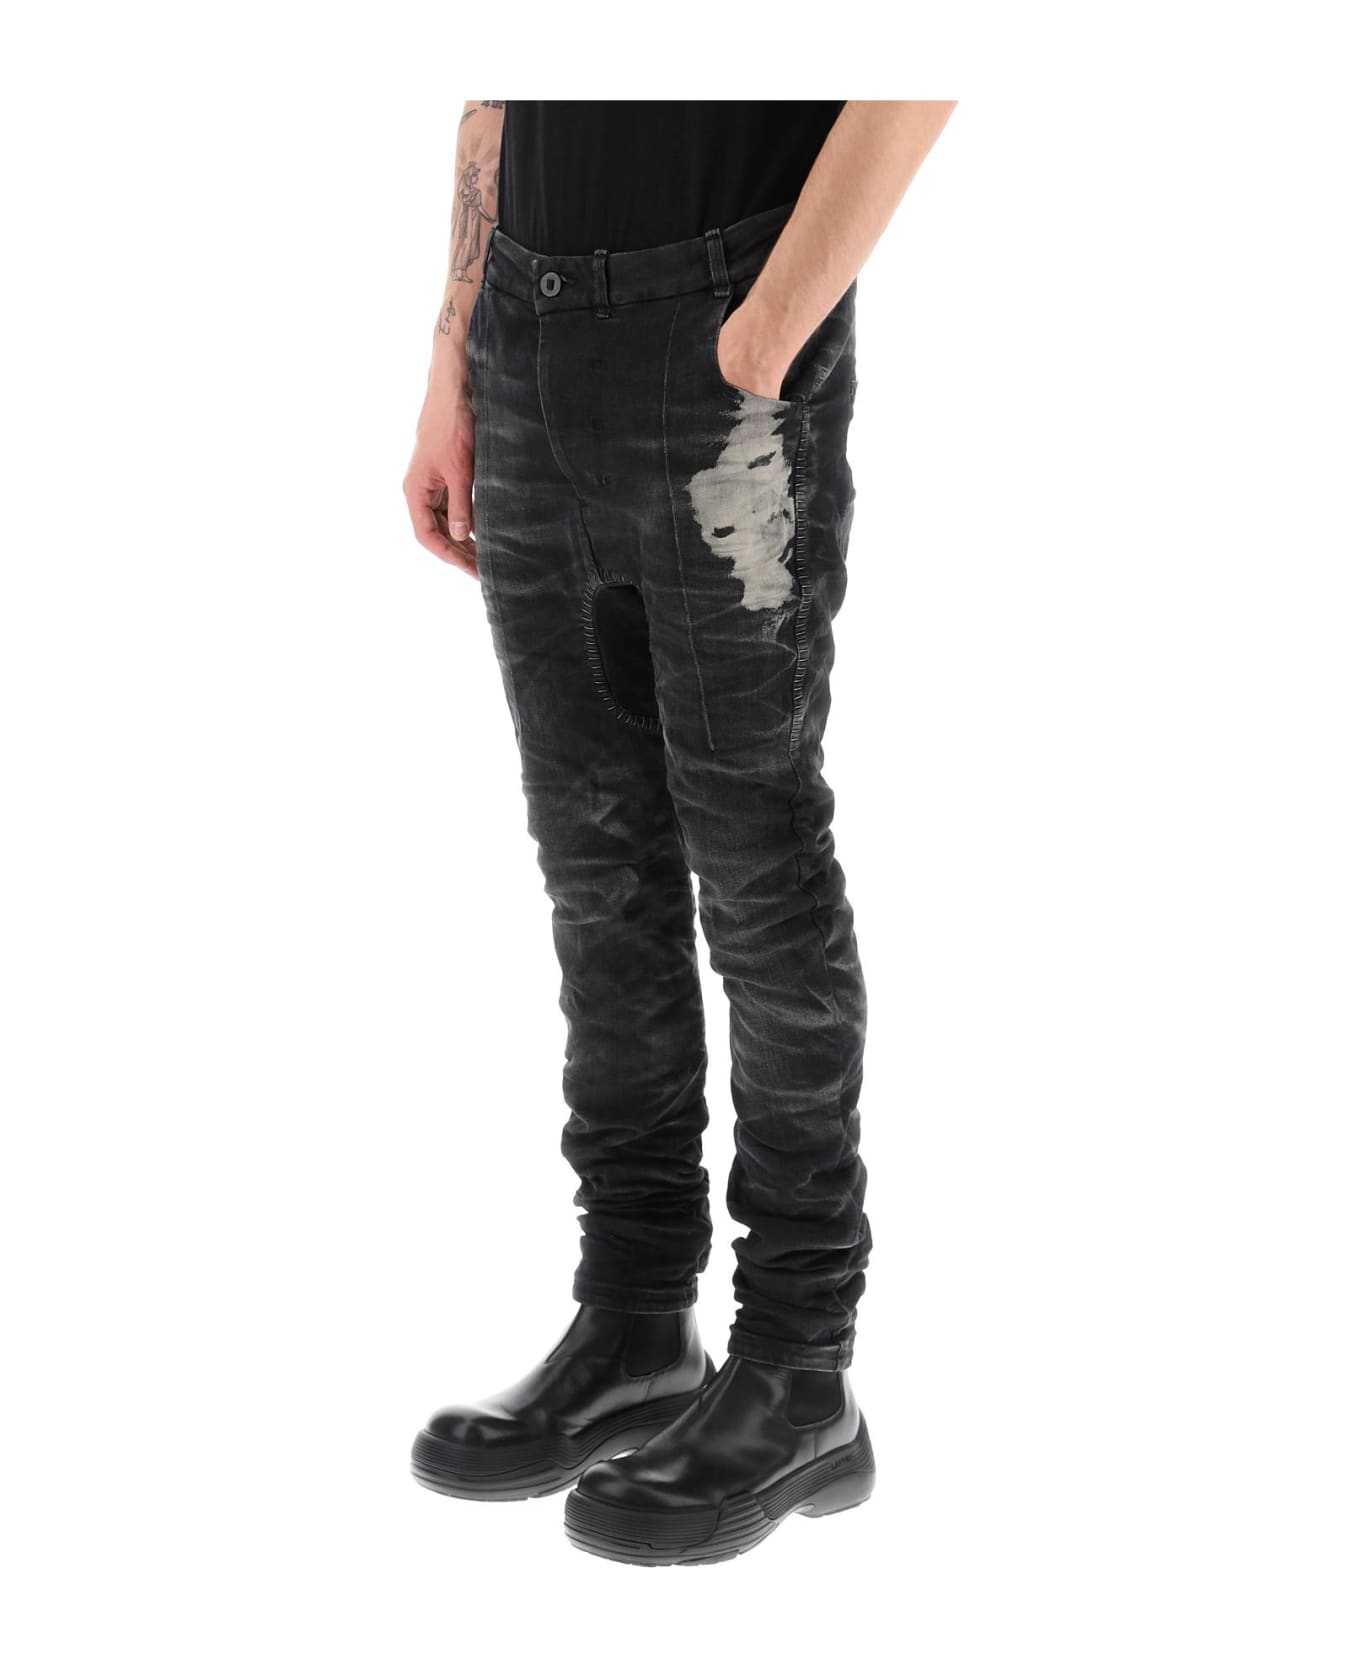 Boris Bidjan Saberi Stone Washed Jeans With Used Effect - BLACK DENIM (Black) デニム